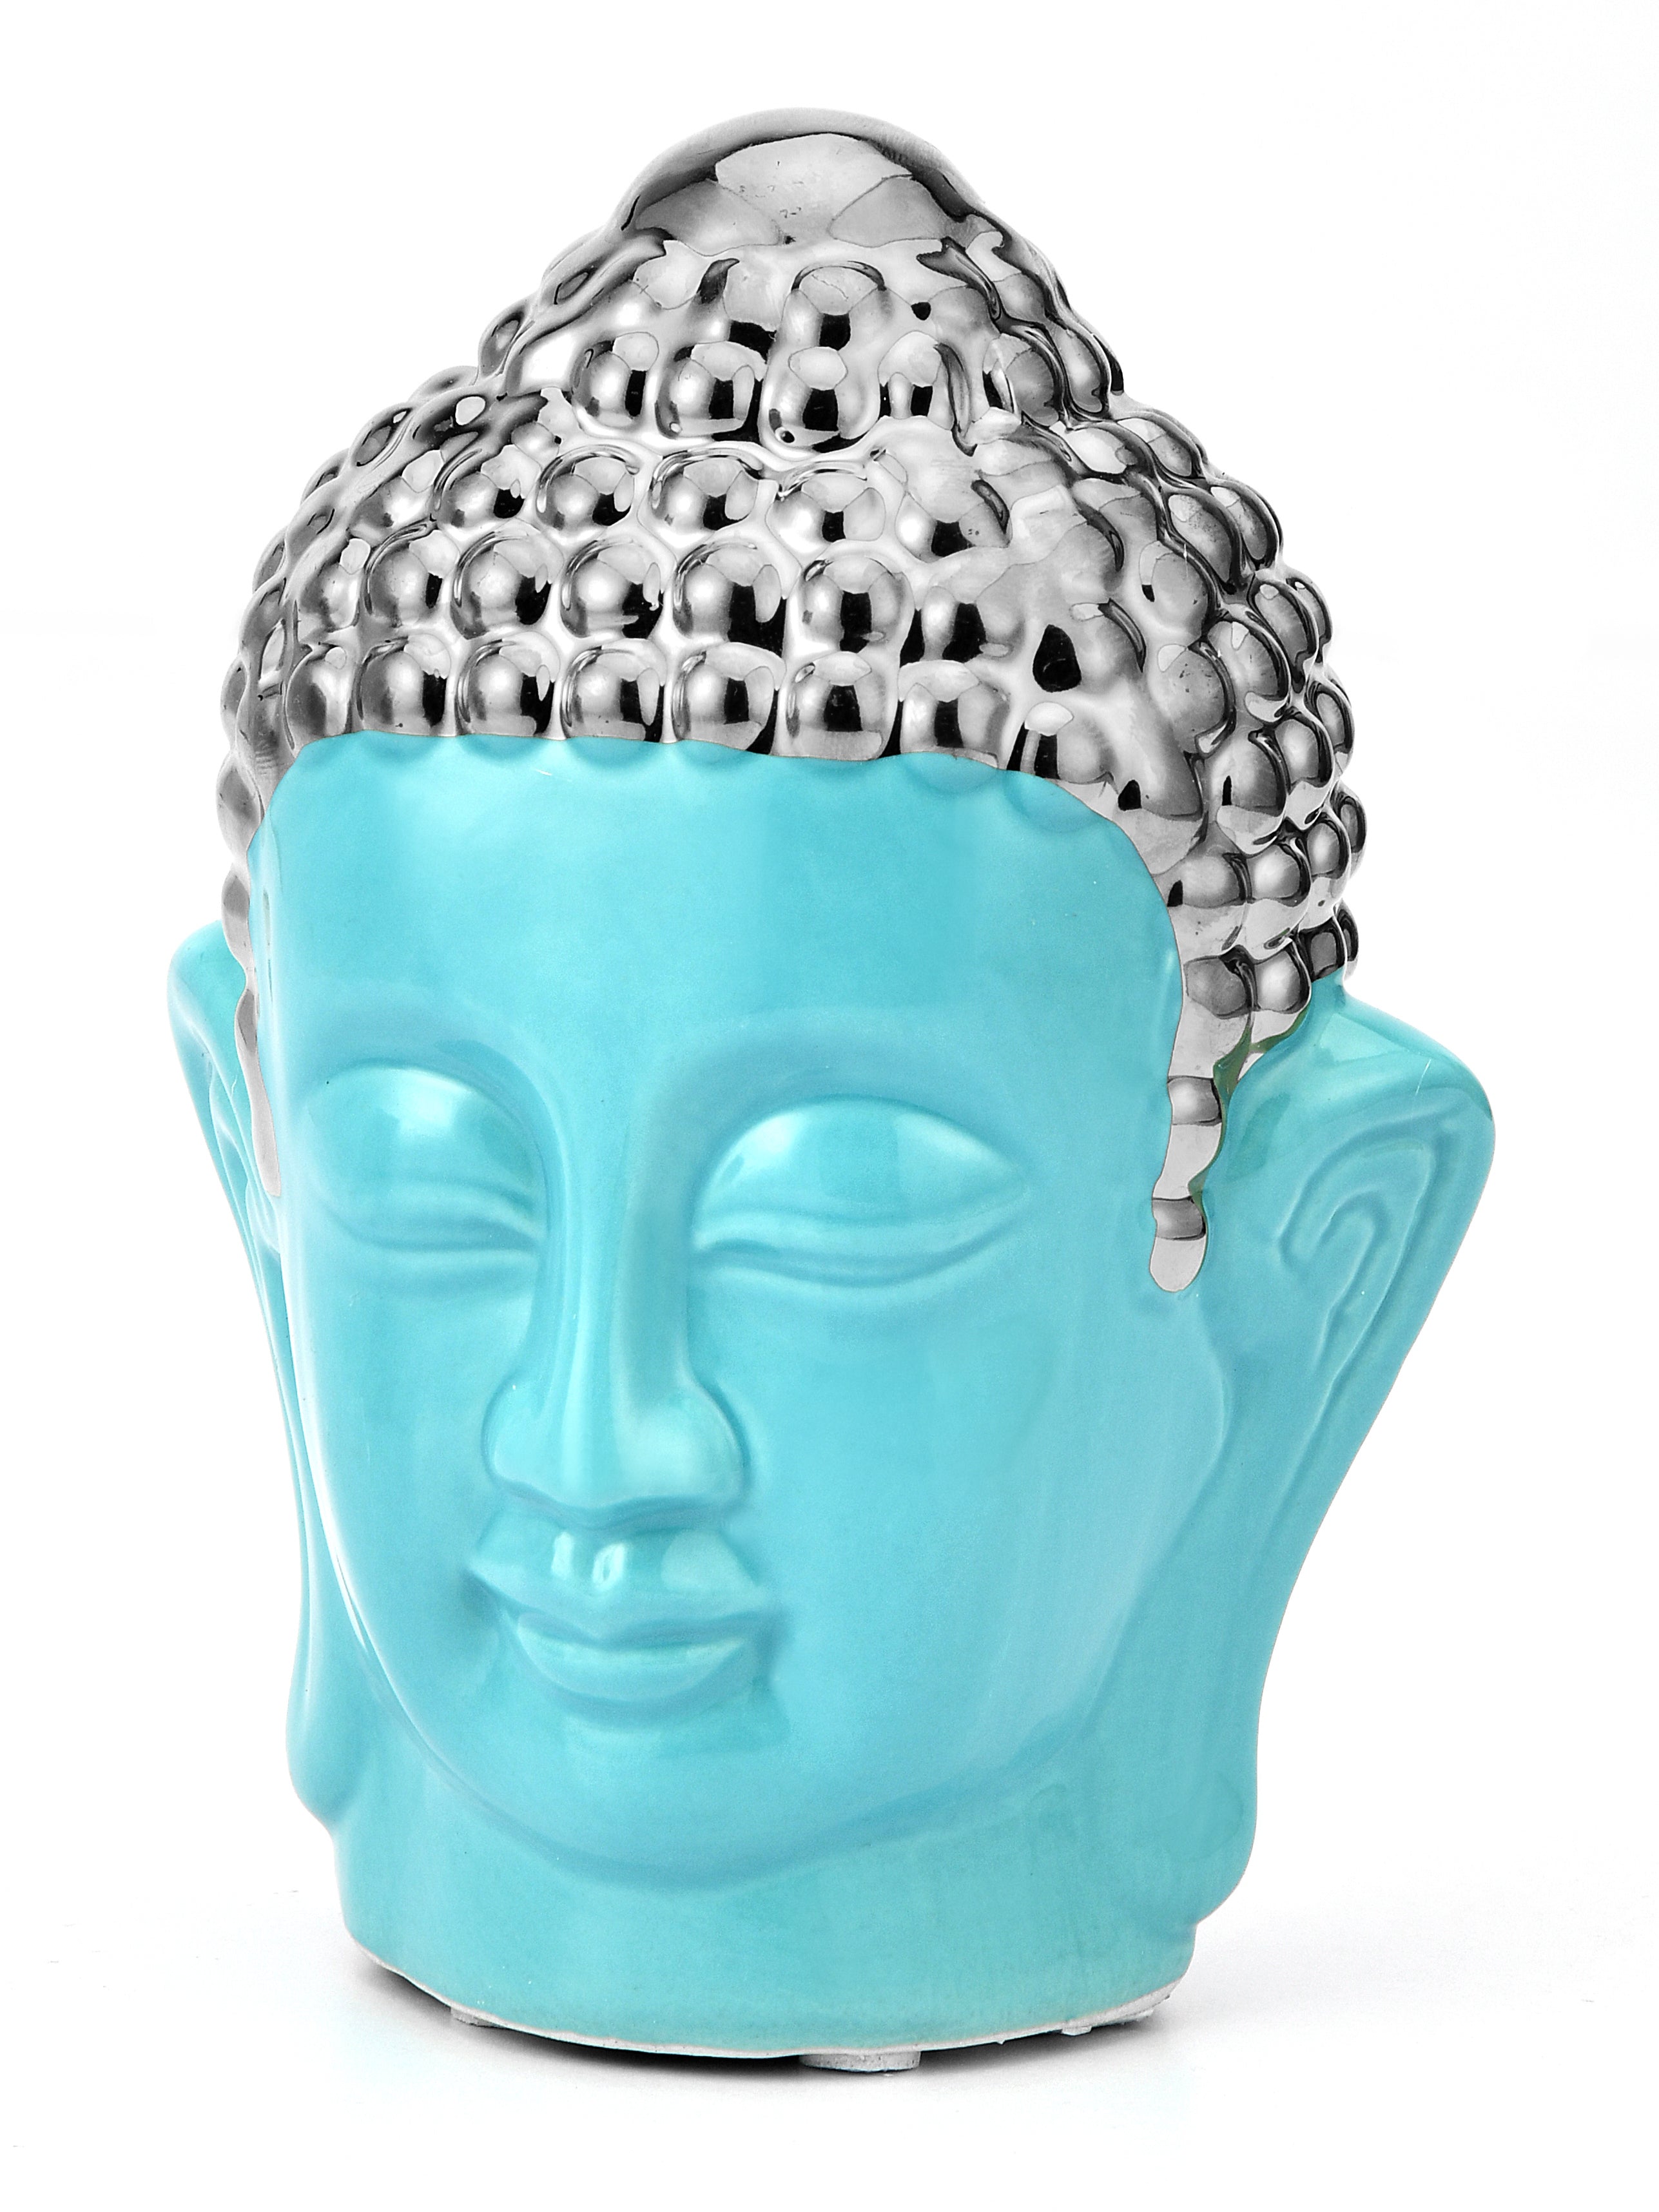 Buddha Face Decorative Ceramic Showpiece (Seagreen & Silver)